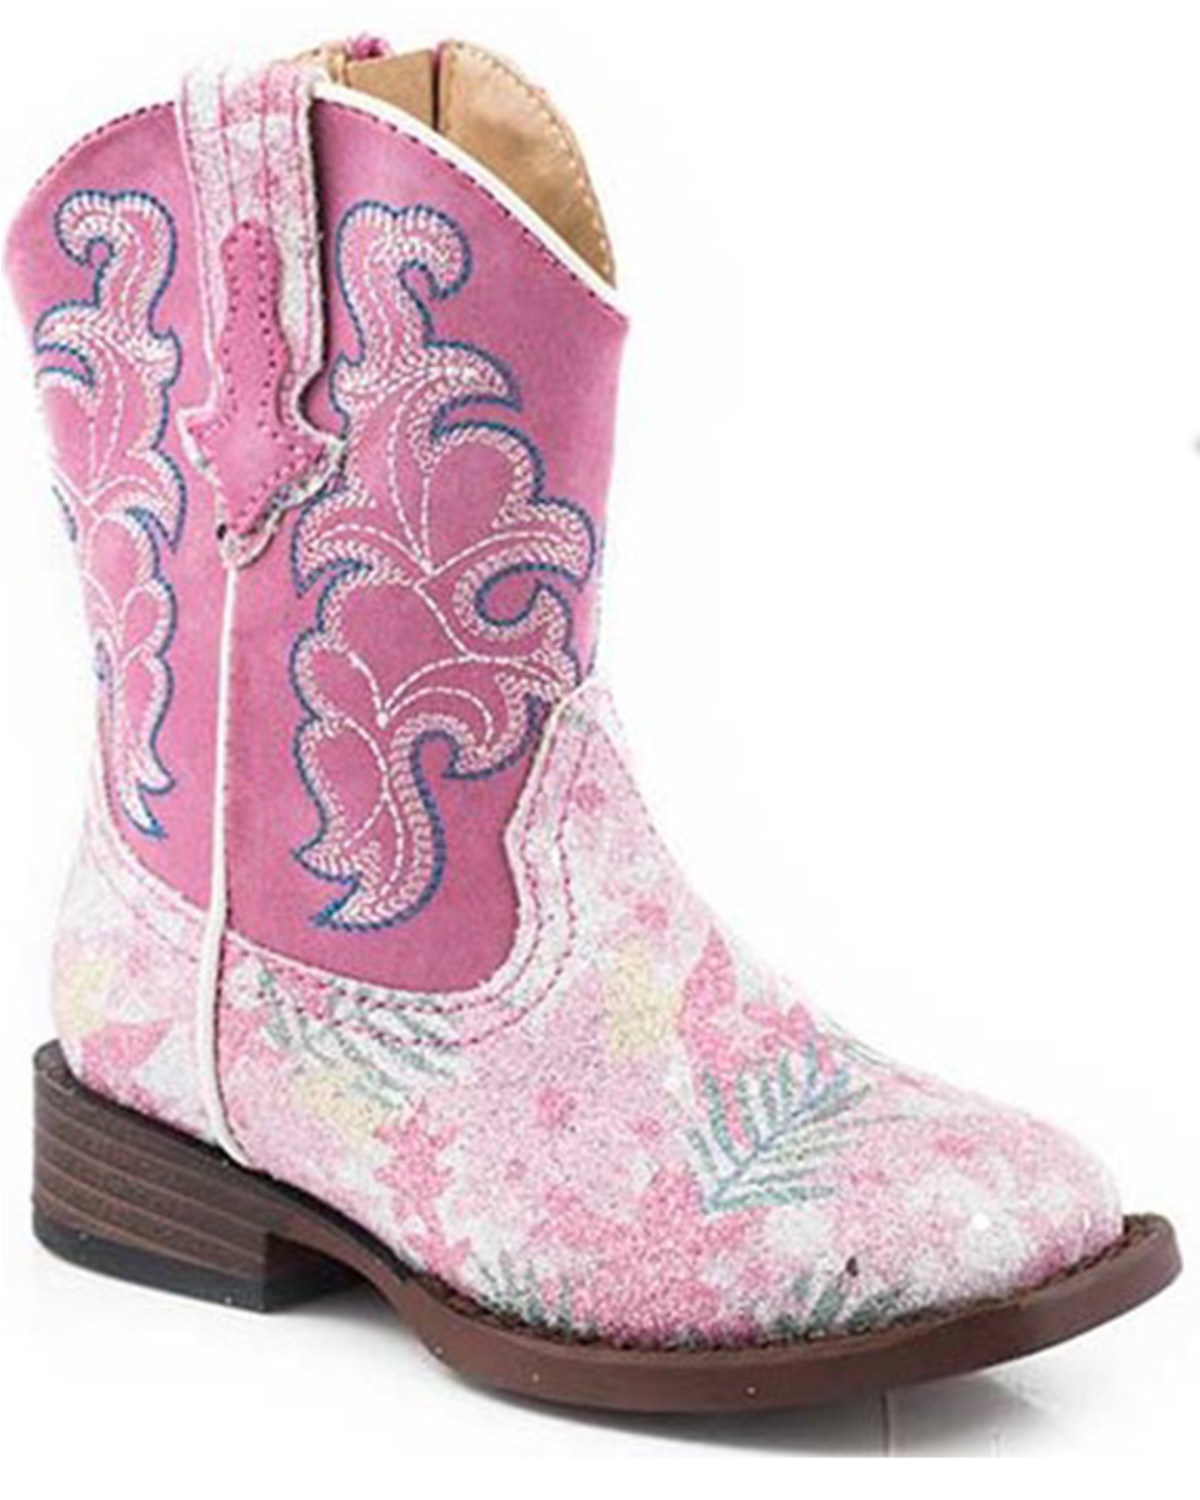 Roper Toddler Girls' Glitter Floral Western Boots - Broad Square Toe